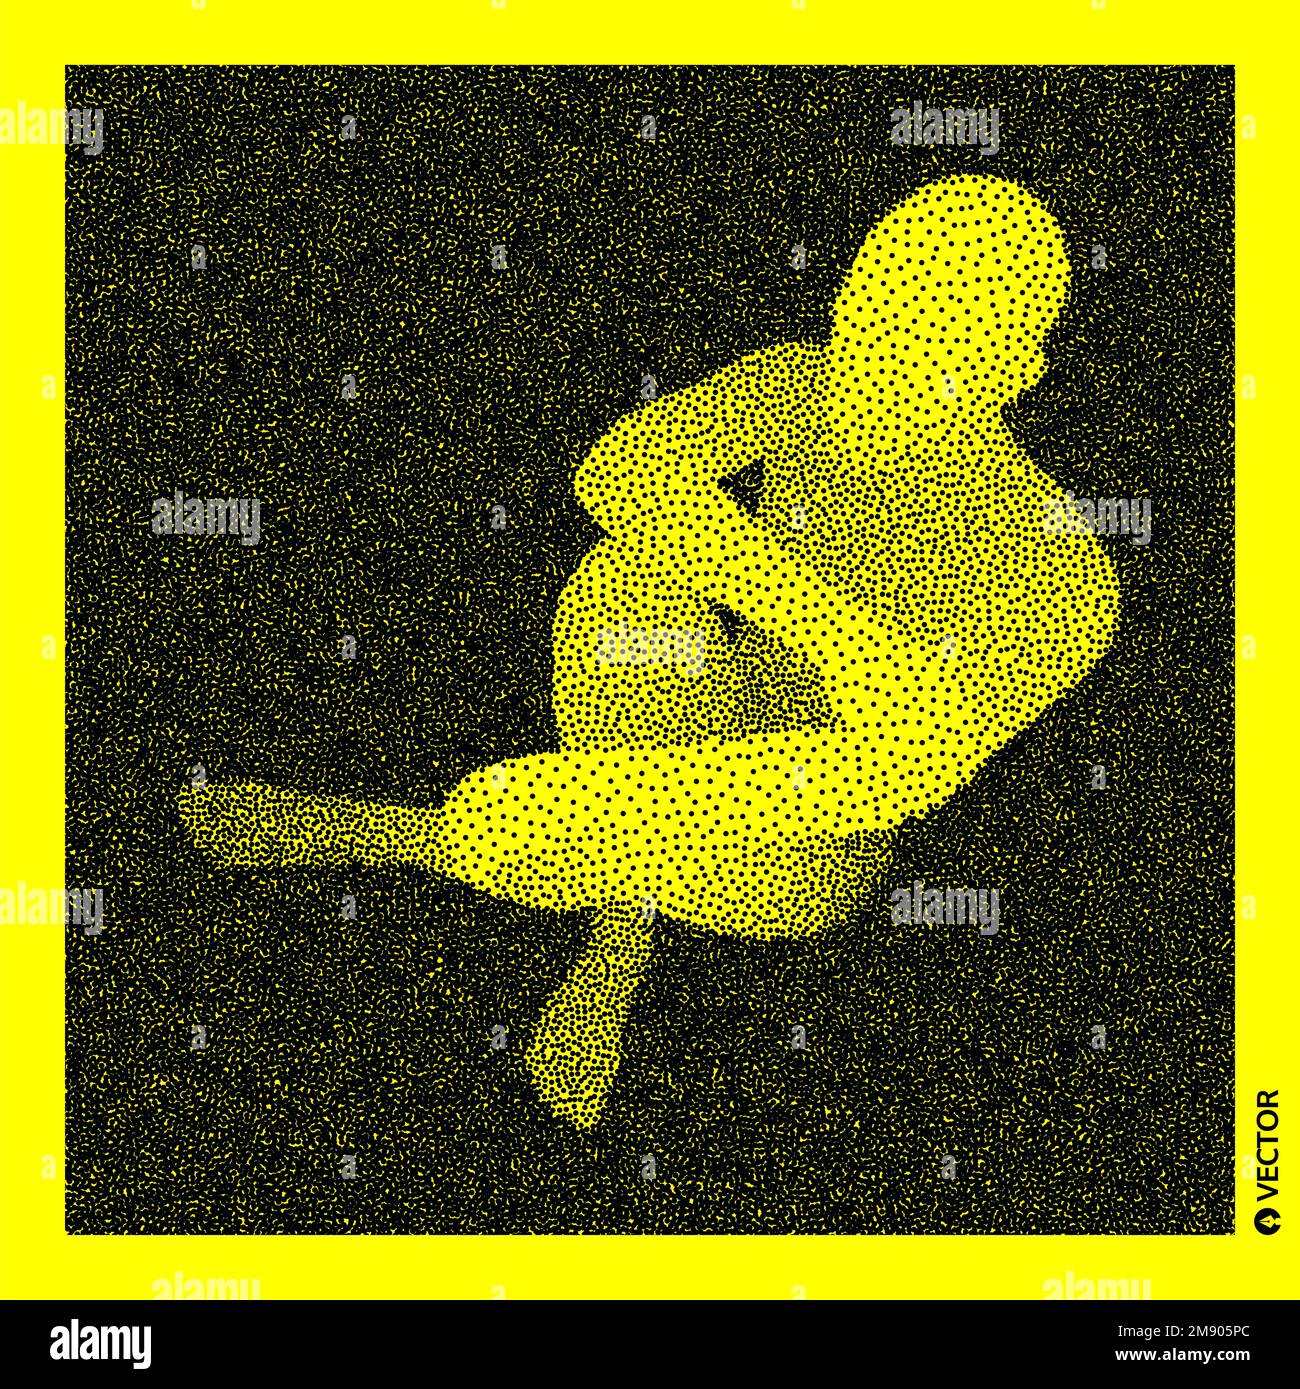 Sitting man. 3D Human Body Model. Black and yellow grainy design. Stippled vector illustration. Stock Vector